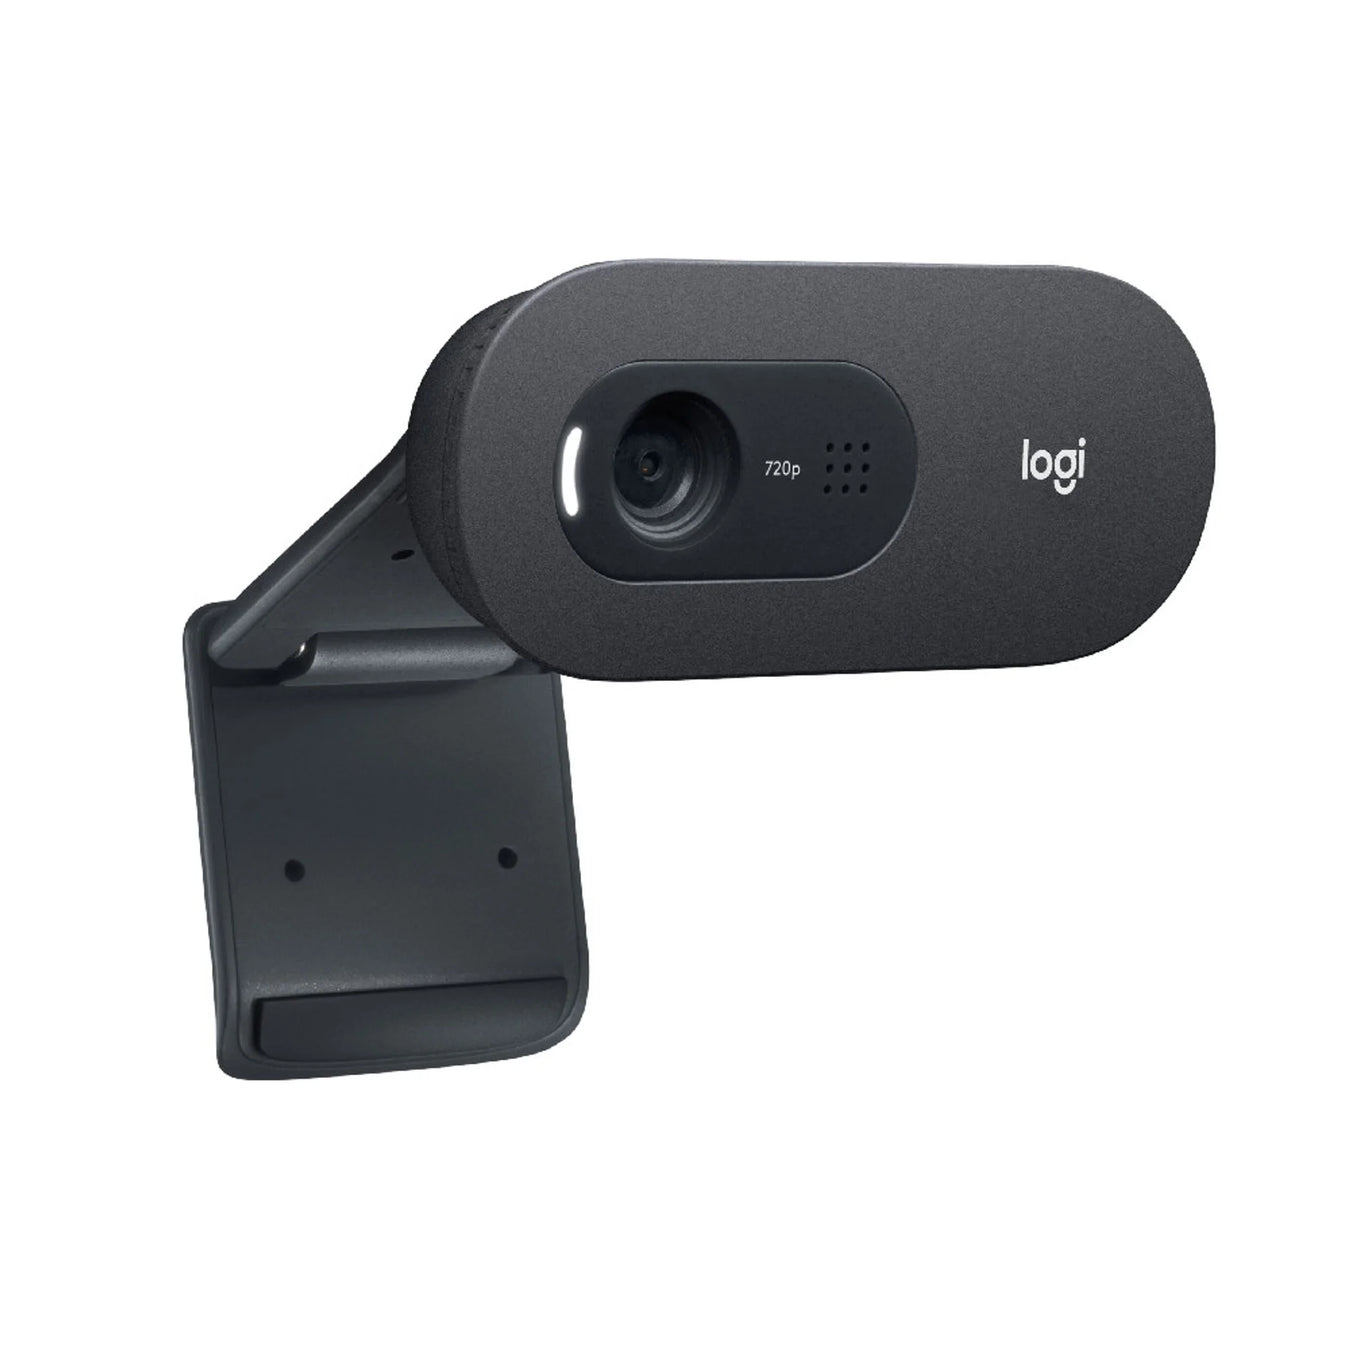 Logitech's Web-Cameras